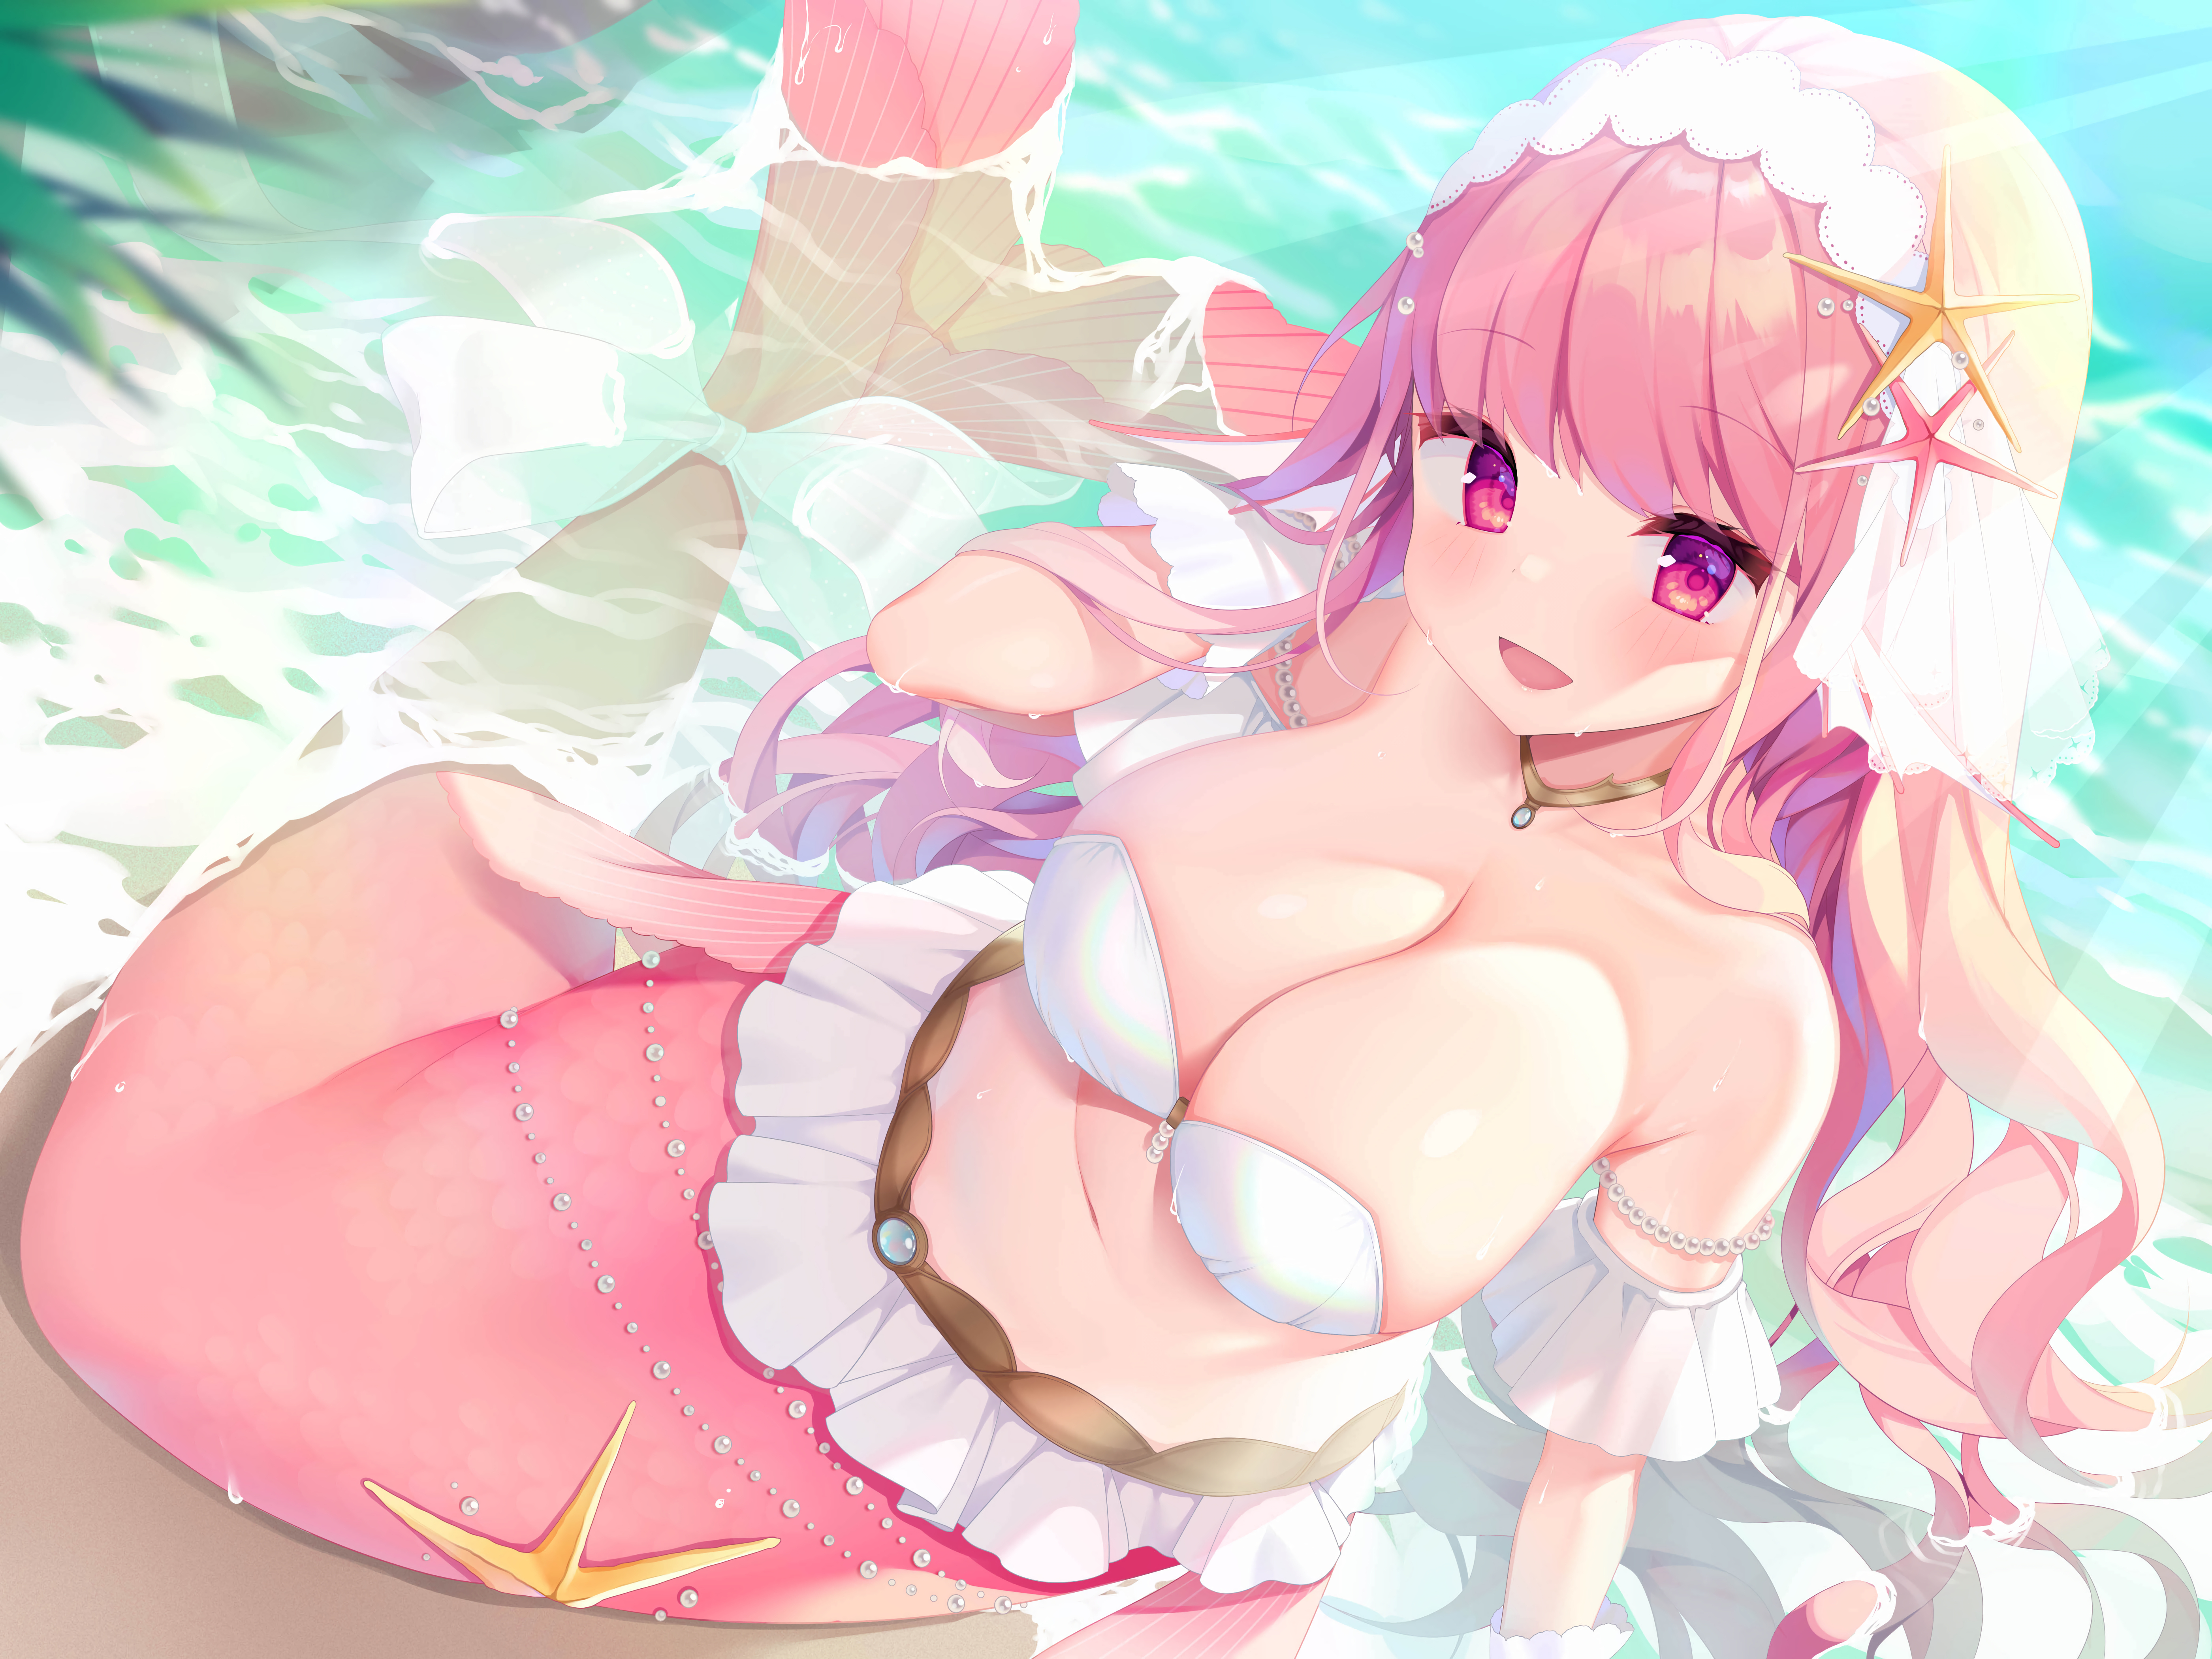 Anime 5600x4200 Shiika Yuno anime anime girls big boobs pink hair cleavage pink eyes water mermaids beach high angle